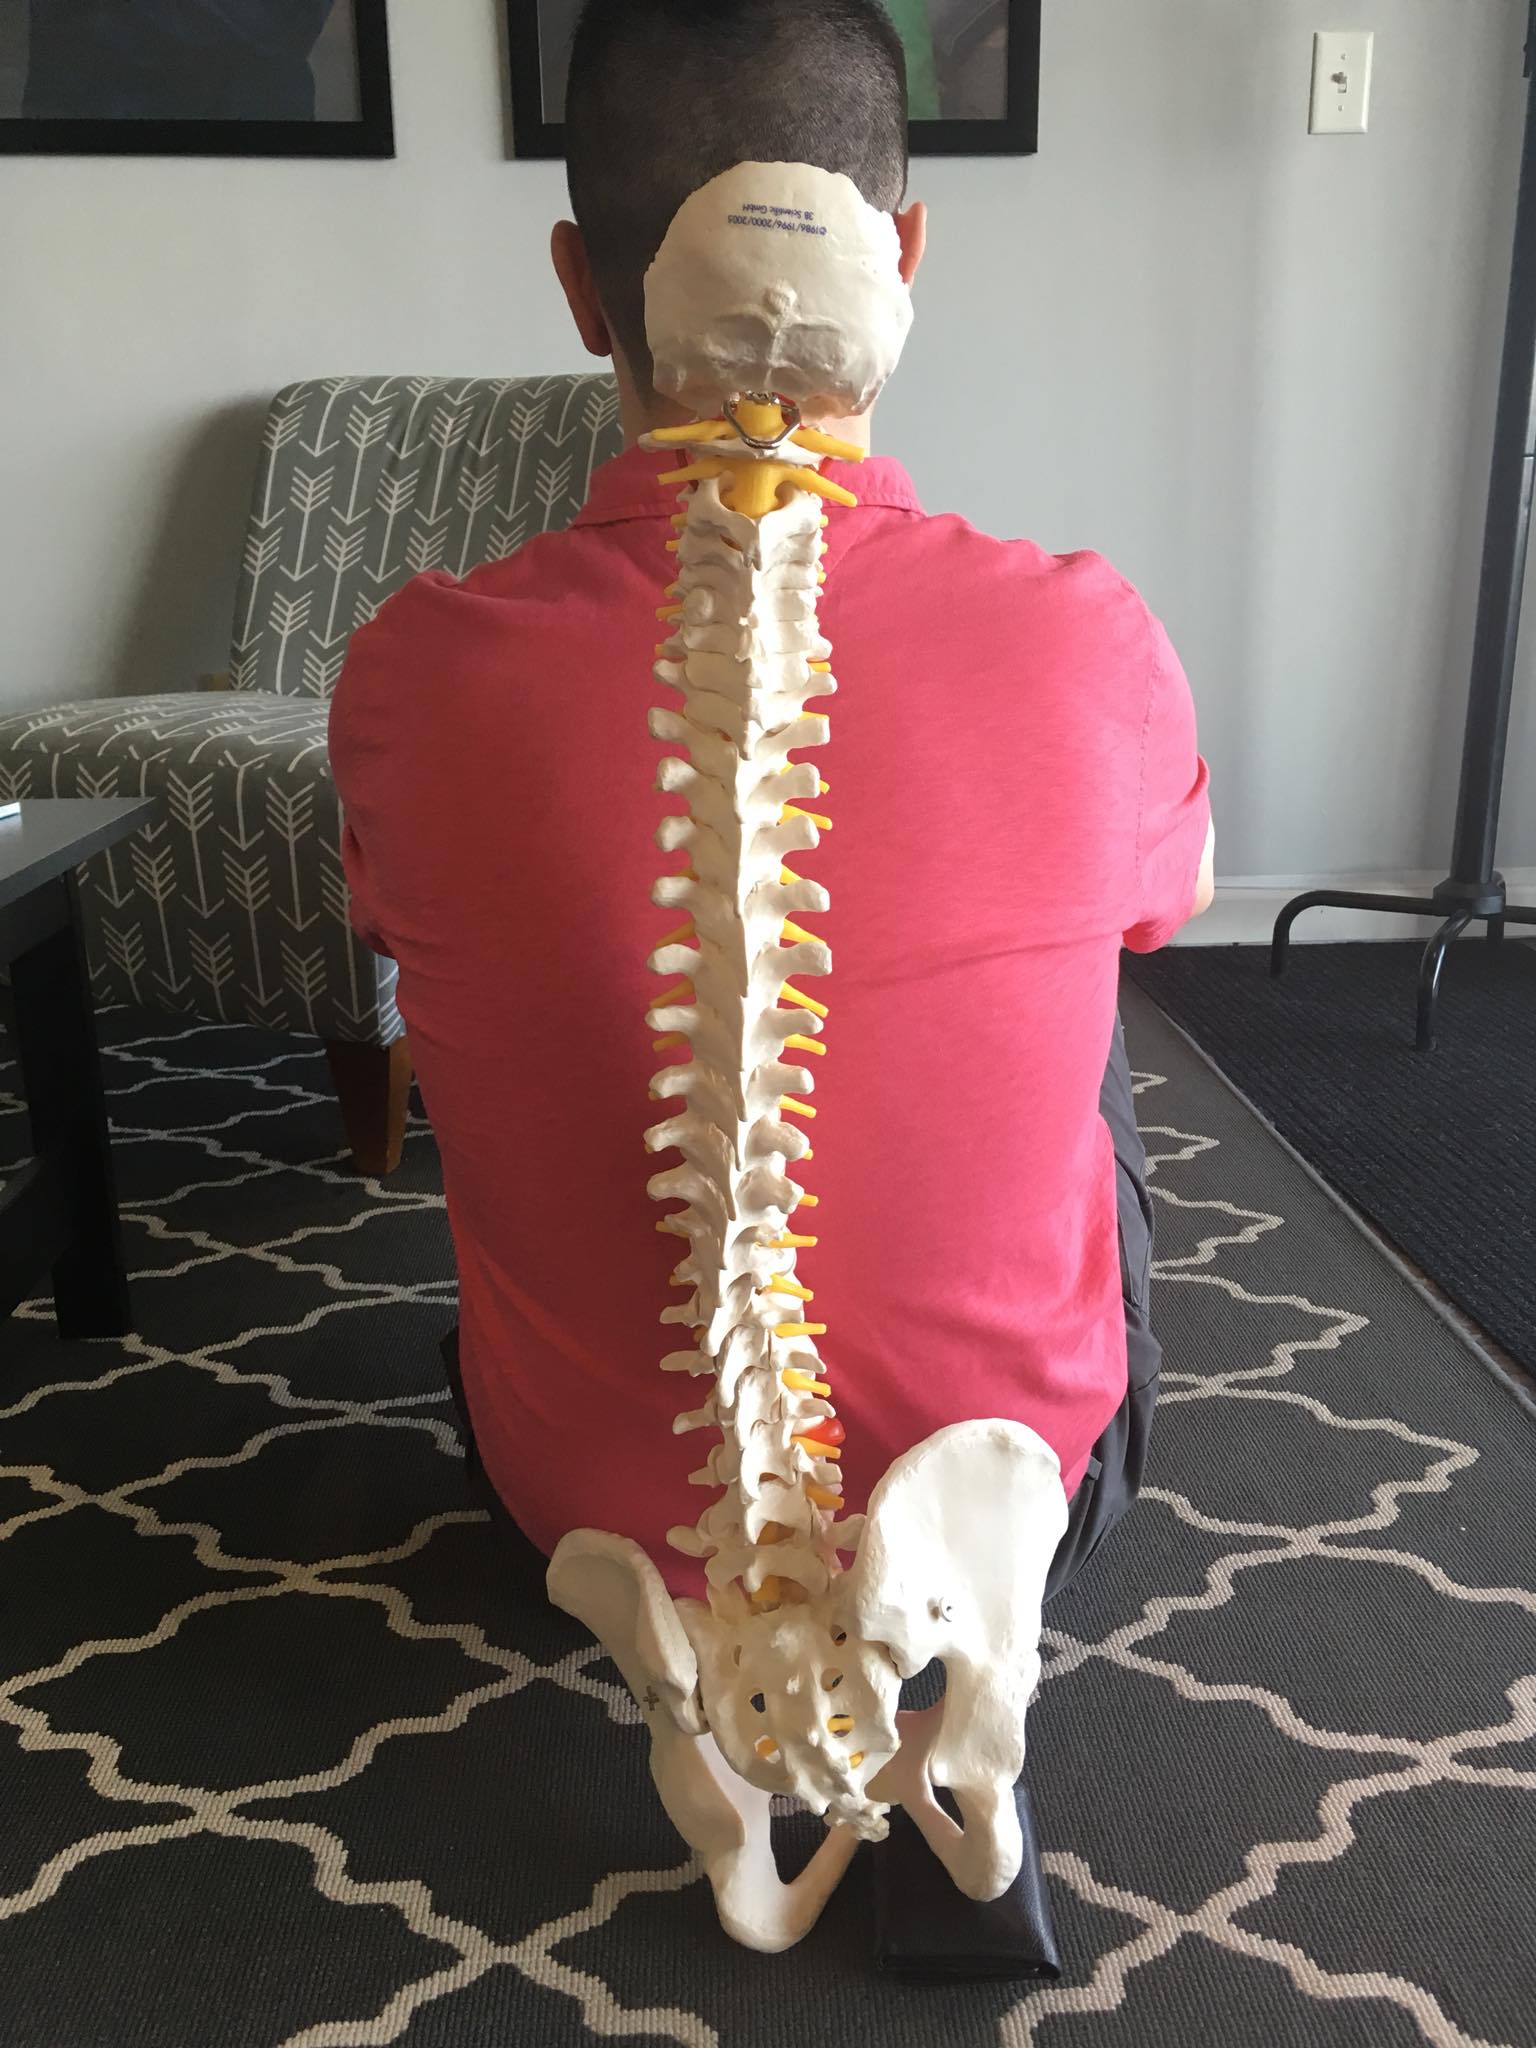 Eden Prairie Chiropractor's 11 Benefits of Good Posture